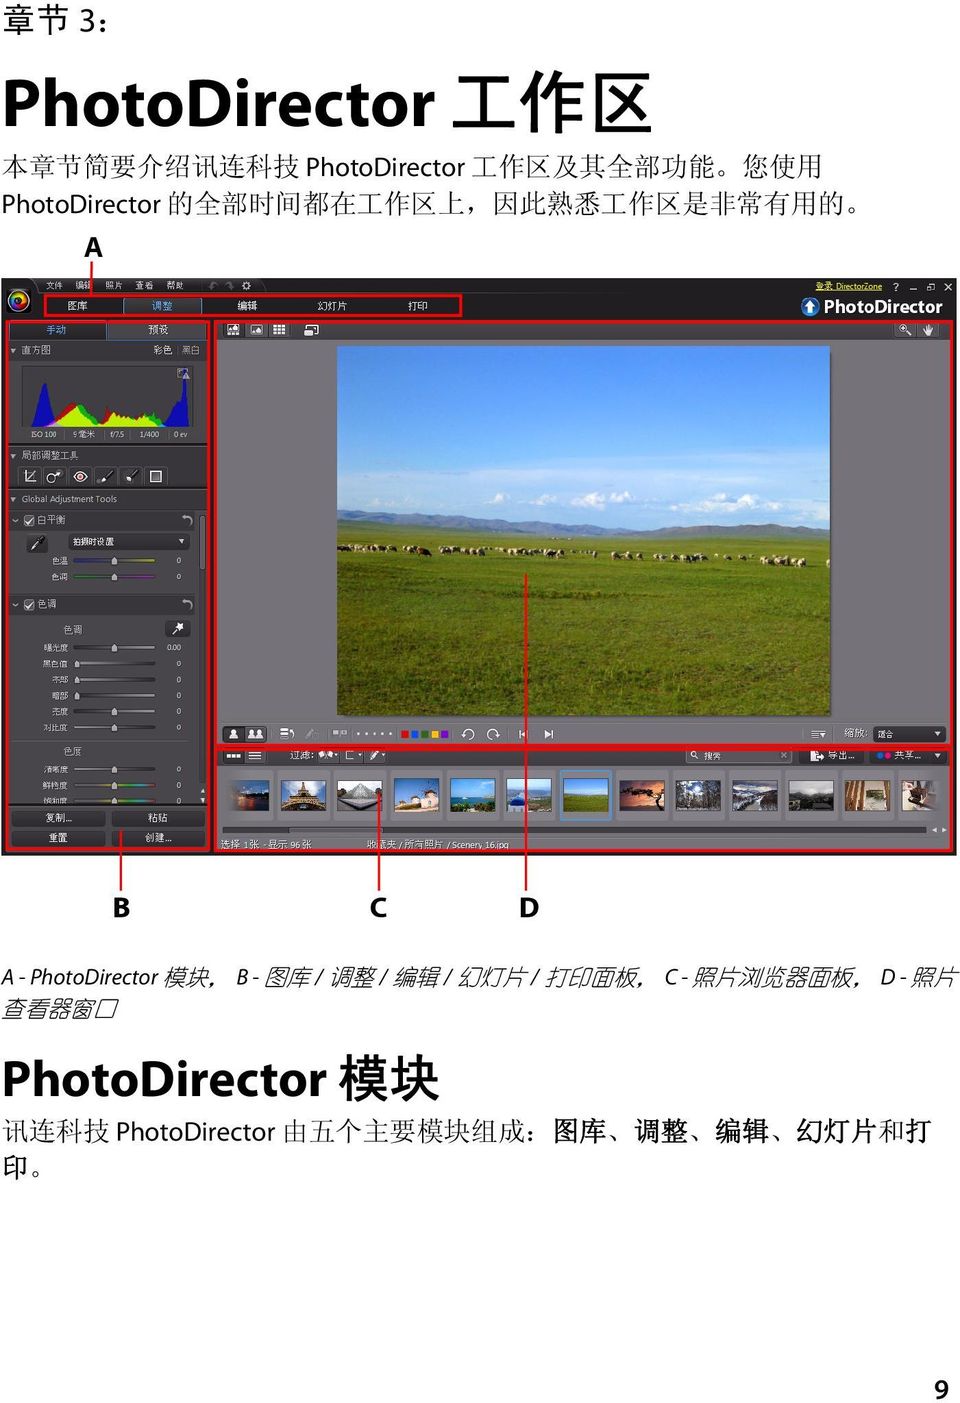 PhotoDirector 模块 B - 图库 / 调整 / 编辑 / 幻灯片 / 打印面板 C - 照片浏览器面板 D -